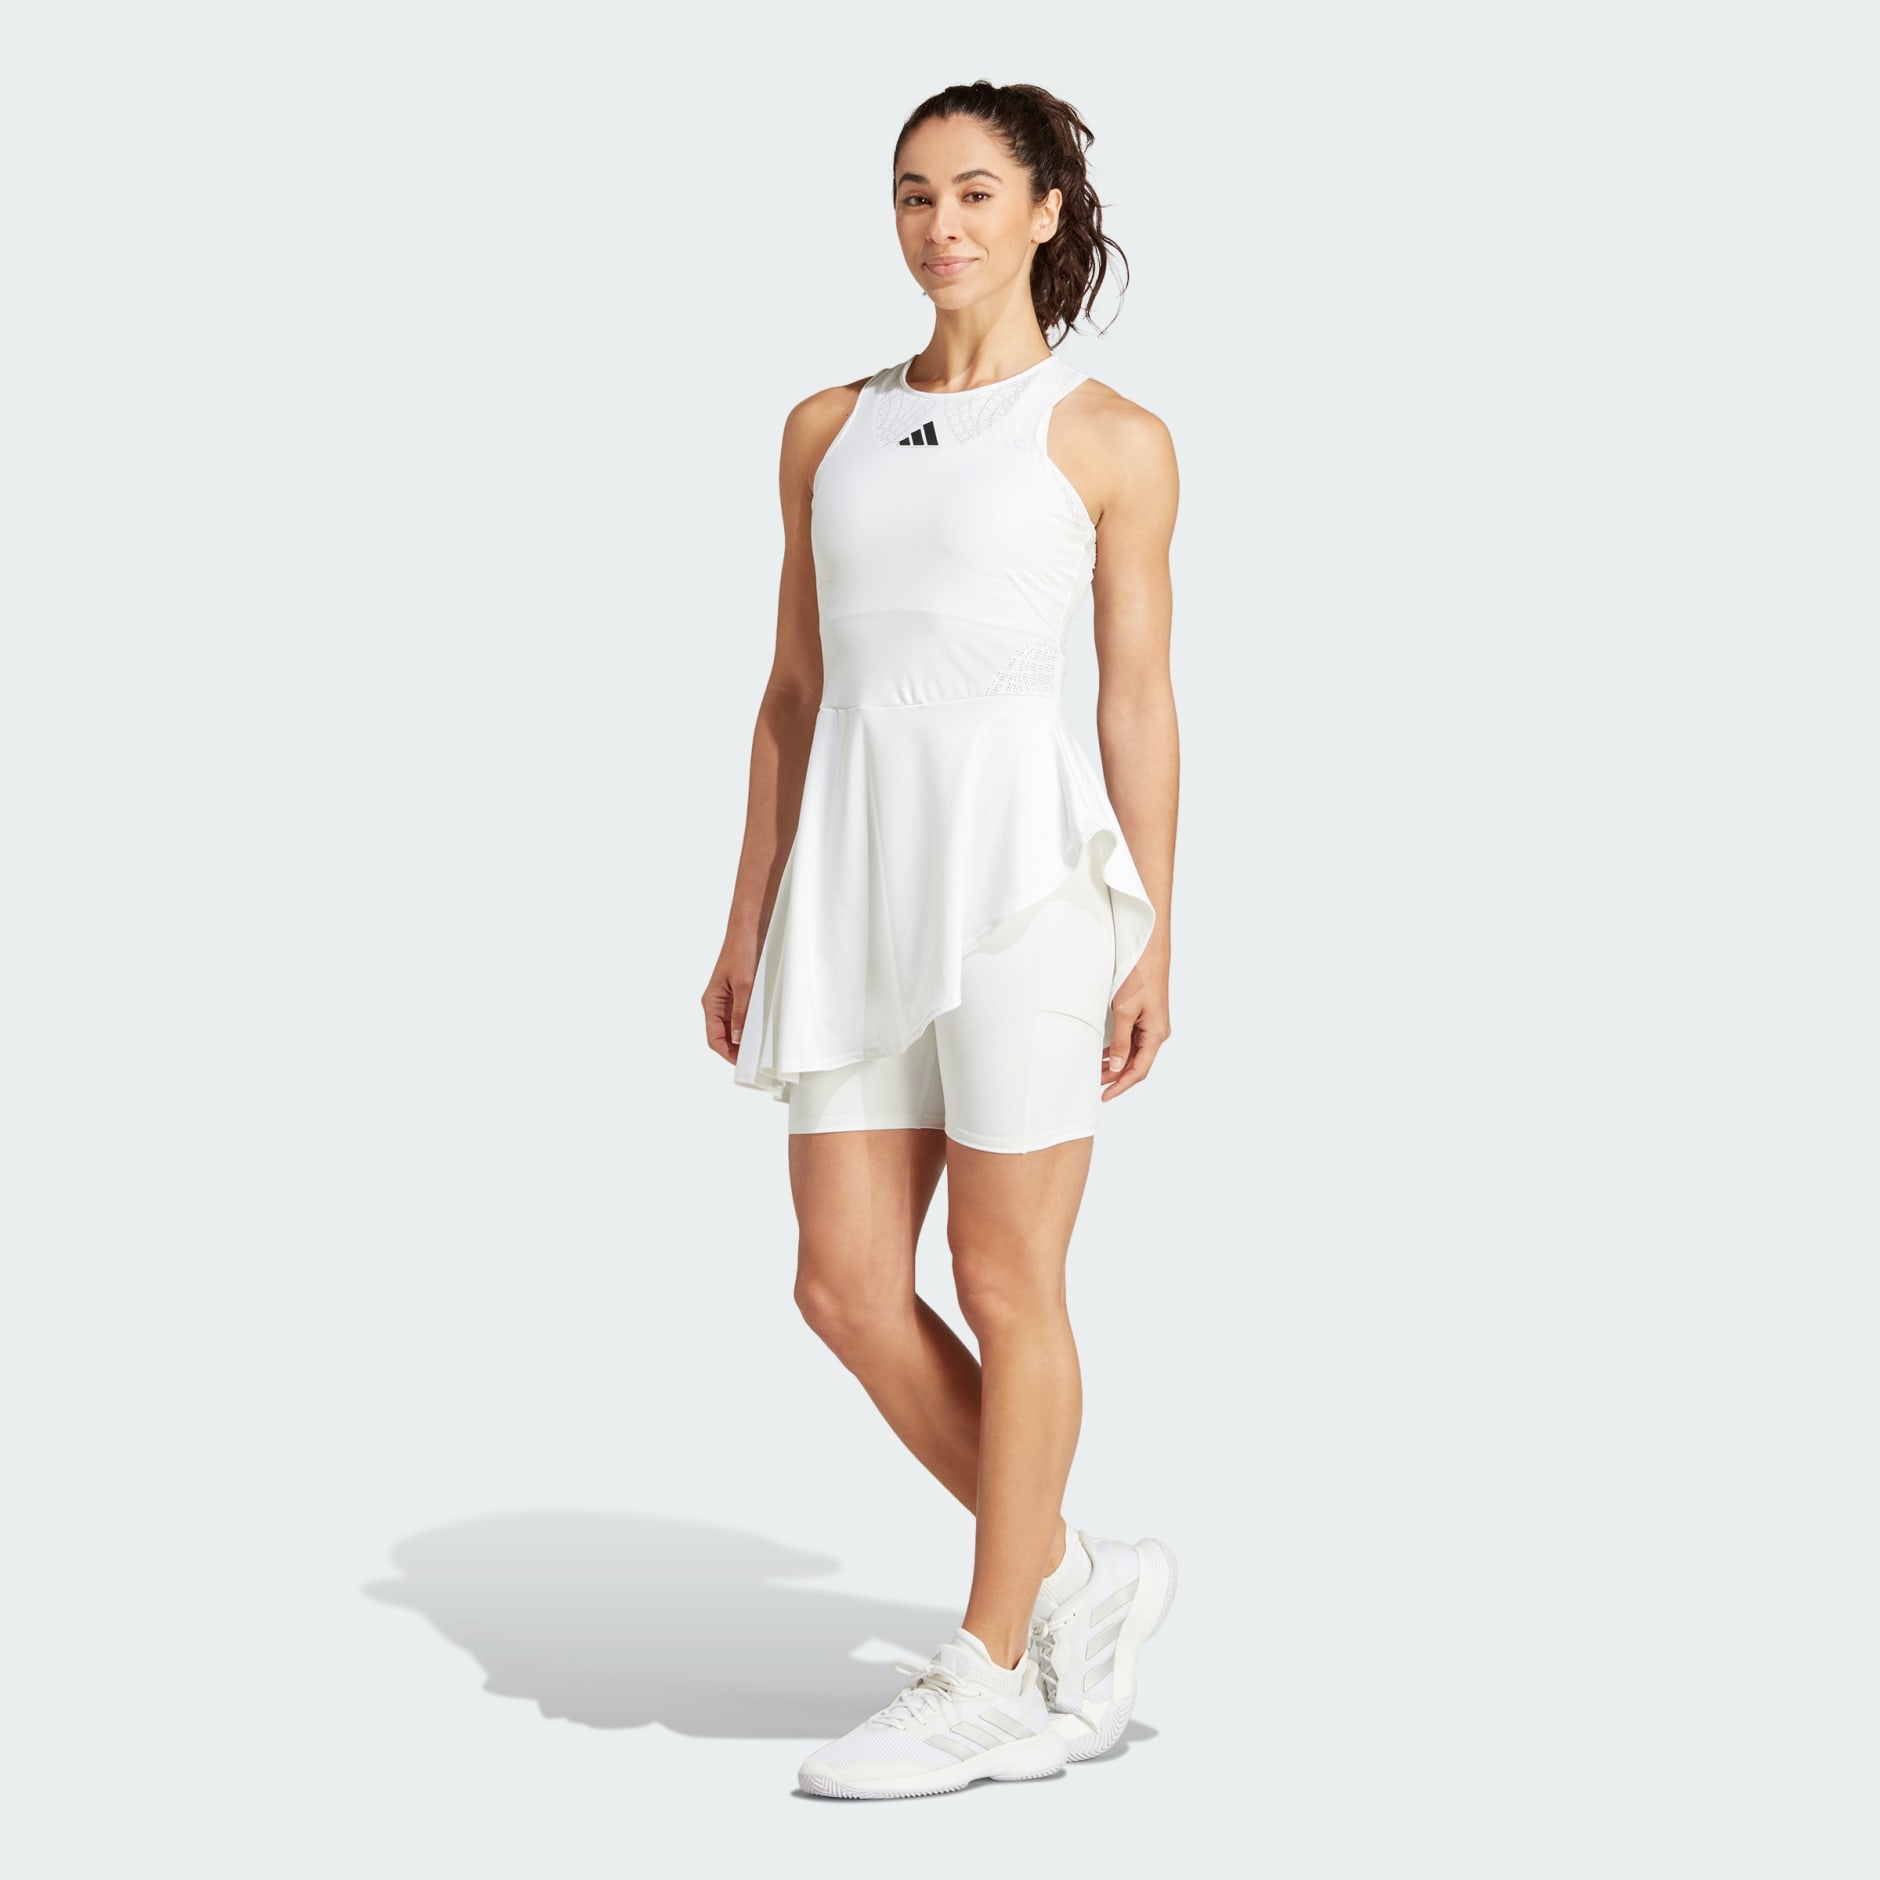 Women's Clothing - AEROREADY Pro Tennis Dress - White | adidas Qatar